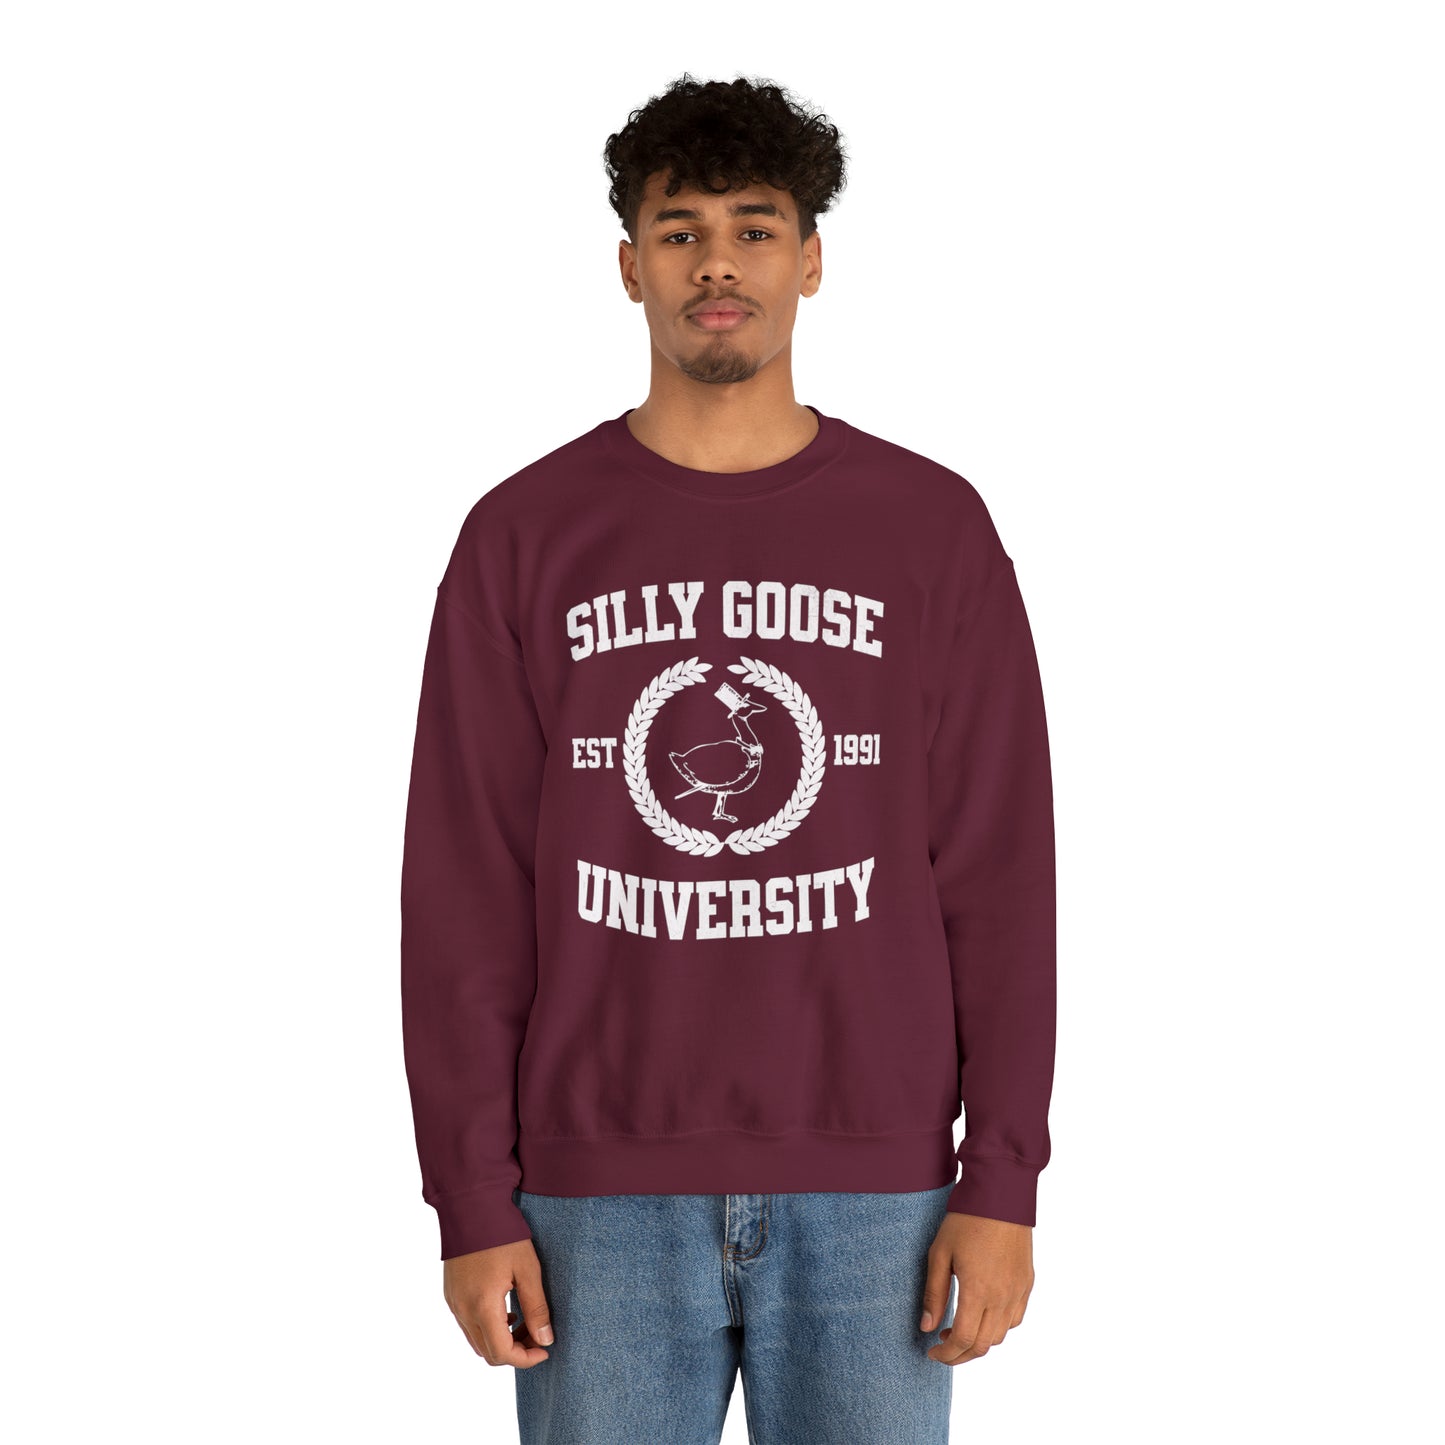 Adult "Silly Goose University" Collegiate Unisex Crewneck Sweatshirt